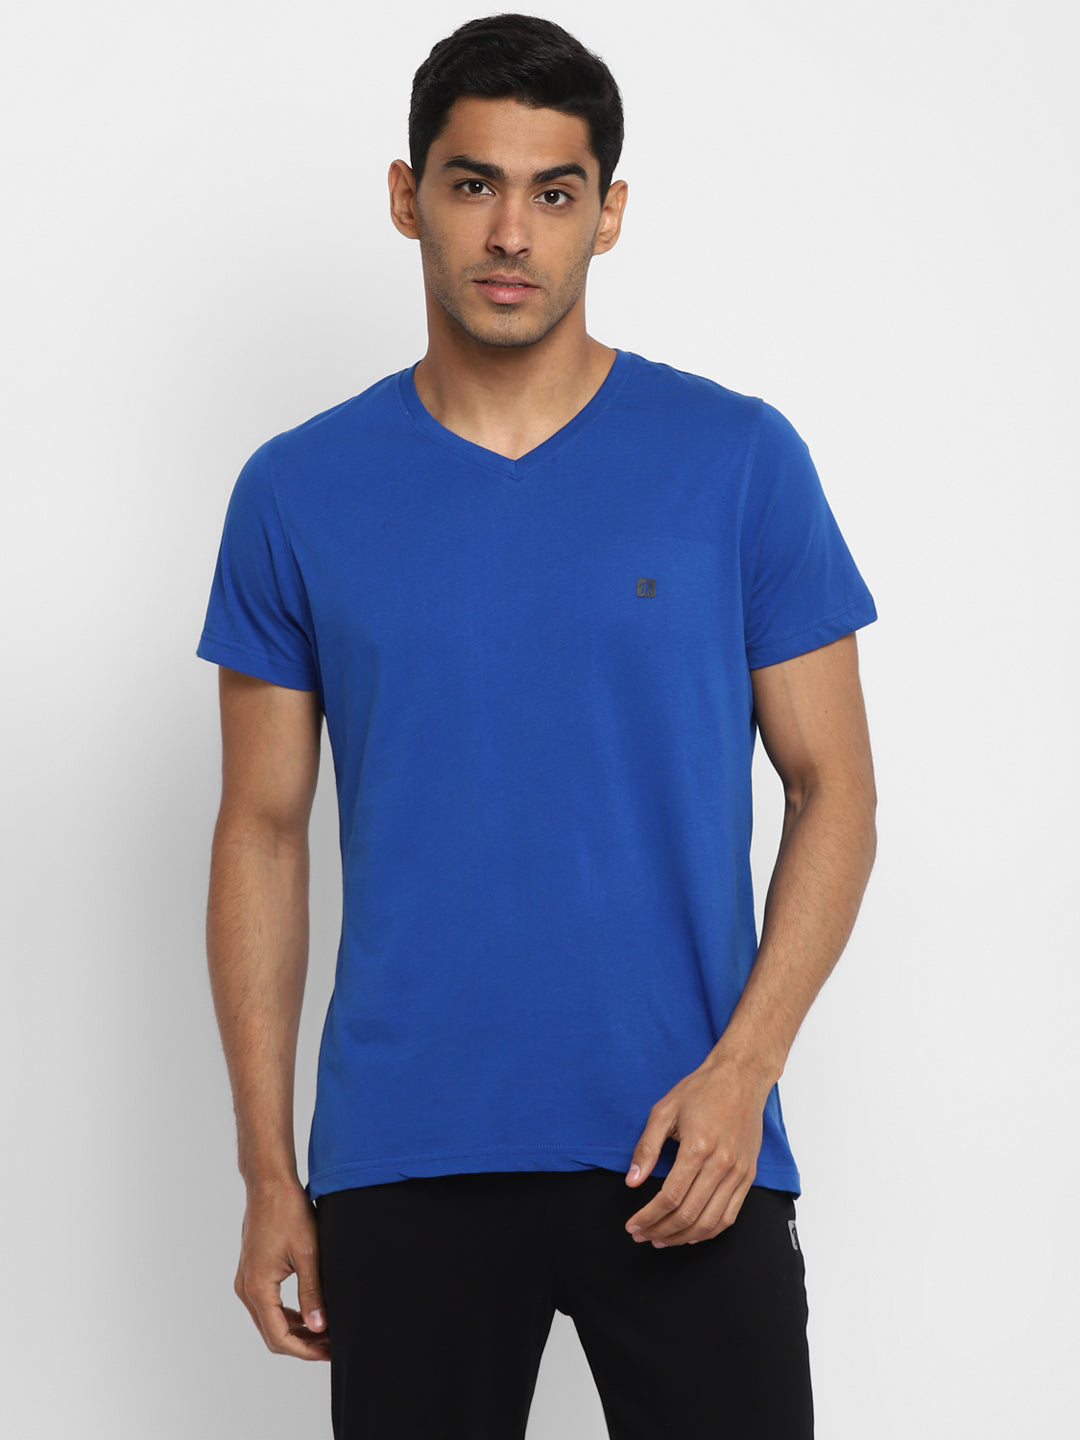 Essentials Red & Blue Solid V Neck T-Shirt (Pack of 2)